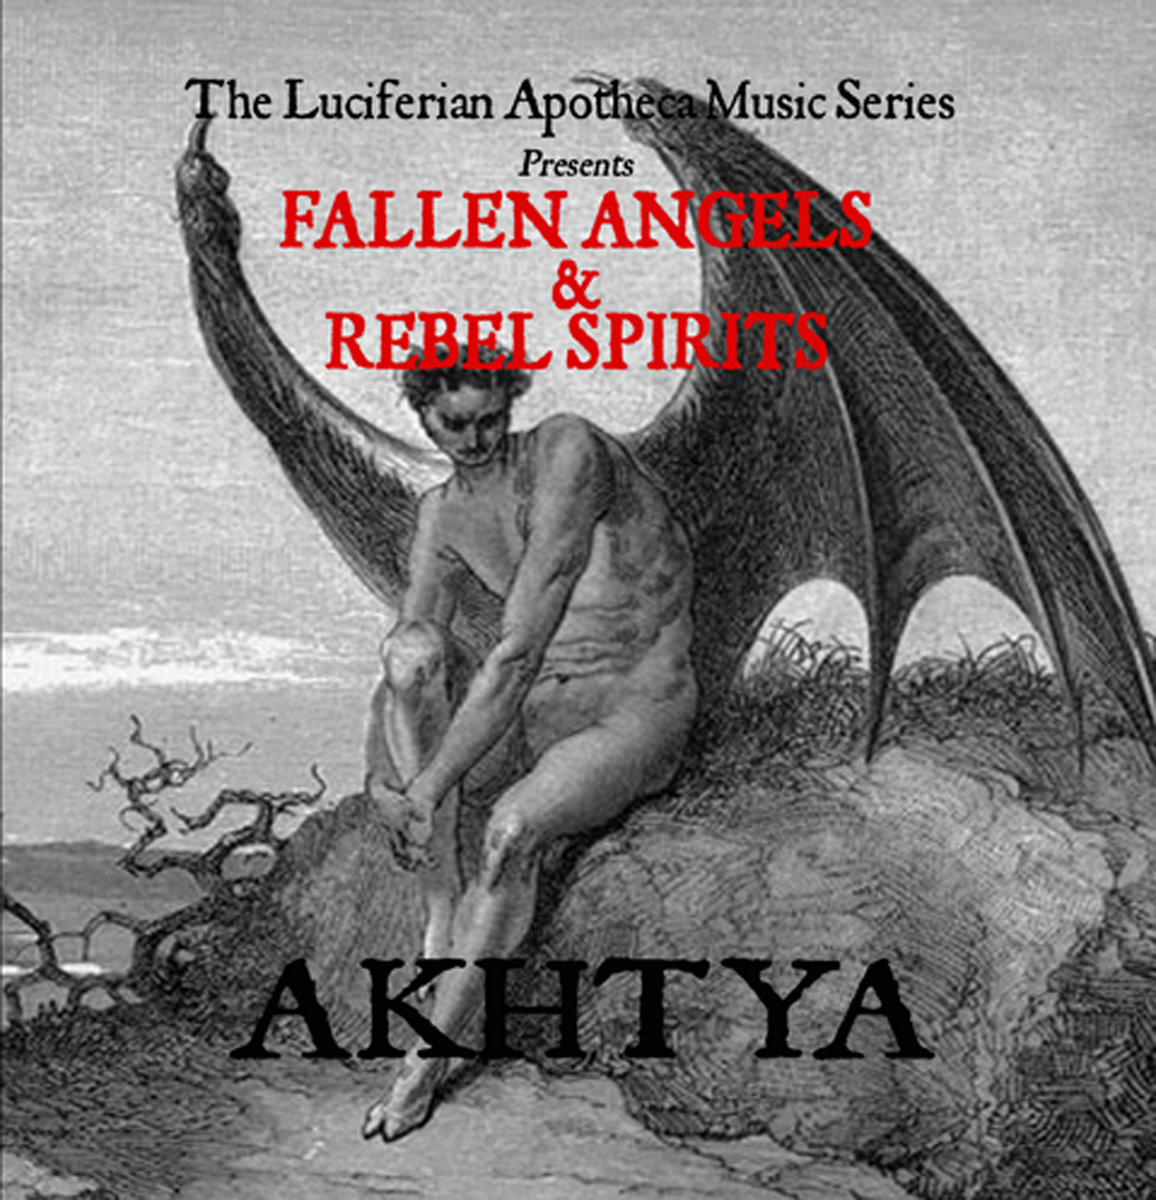 Akhtya--Fallen Angels And Rebel Spirits-16B-48k-WEB-FLAC-2013-ORDER Download